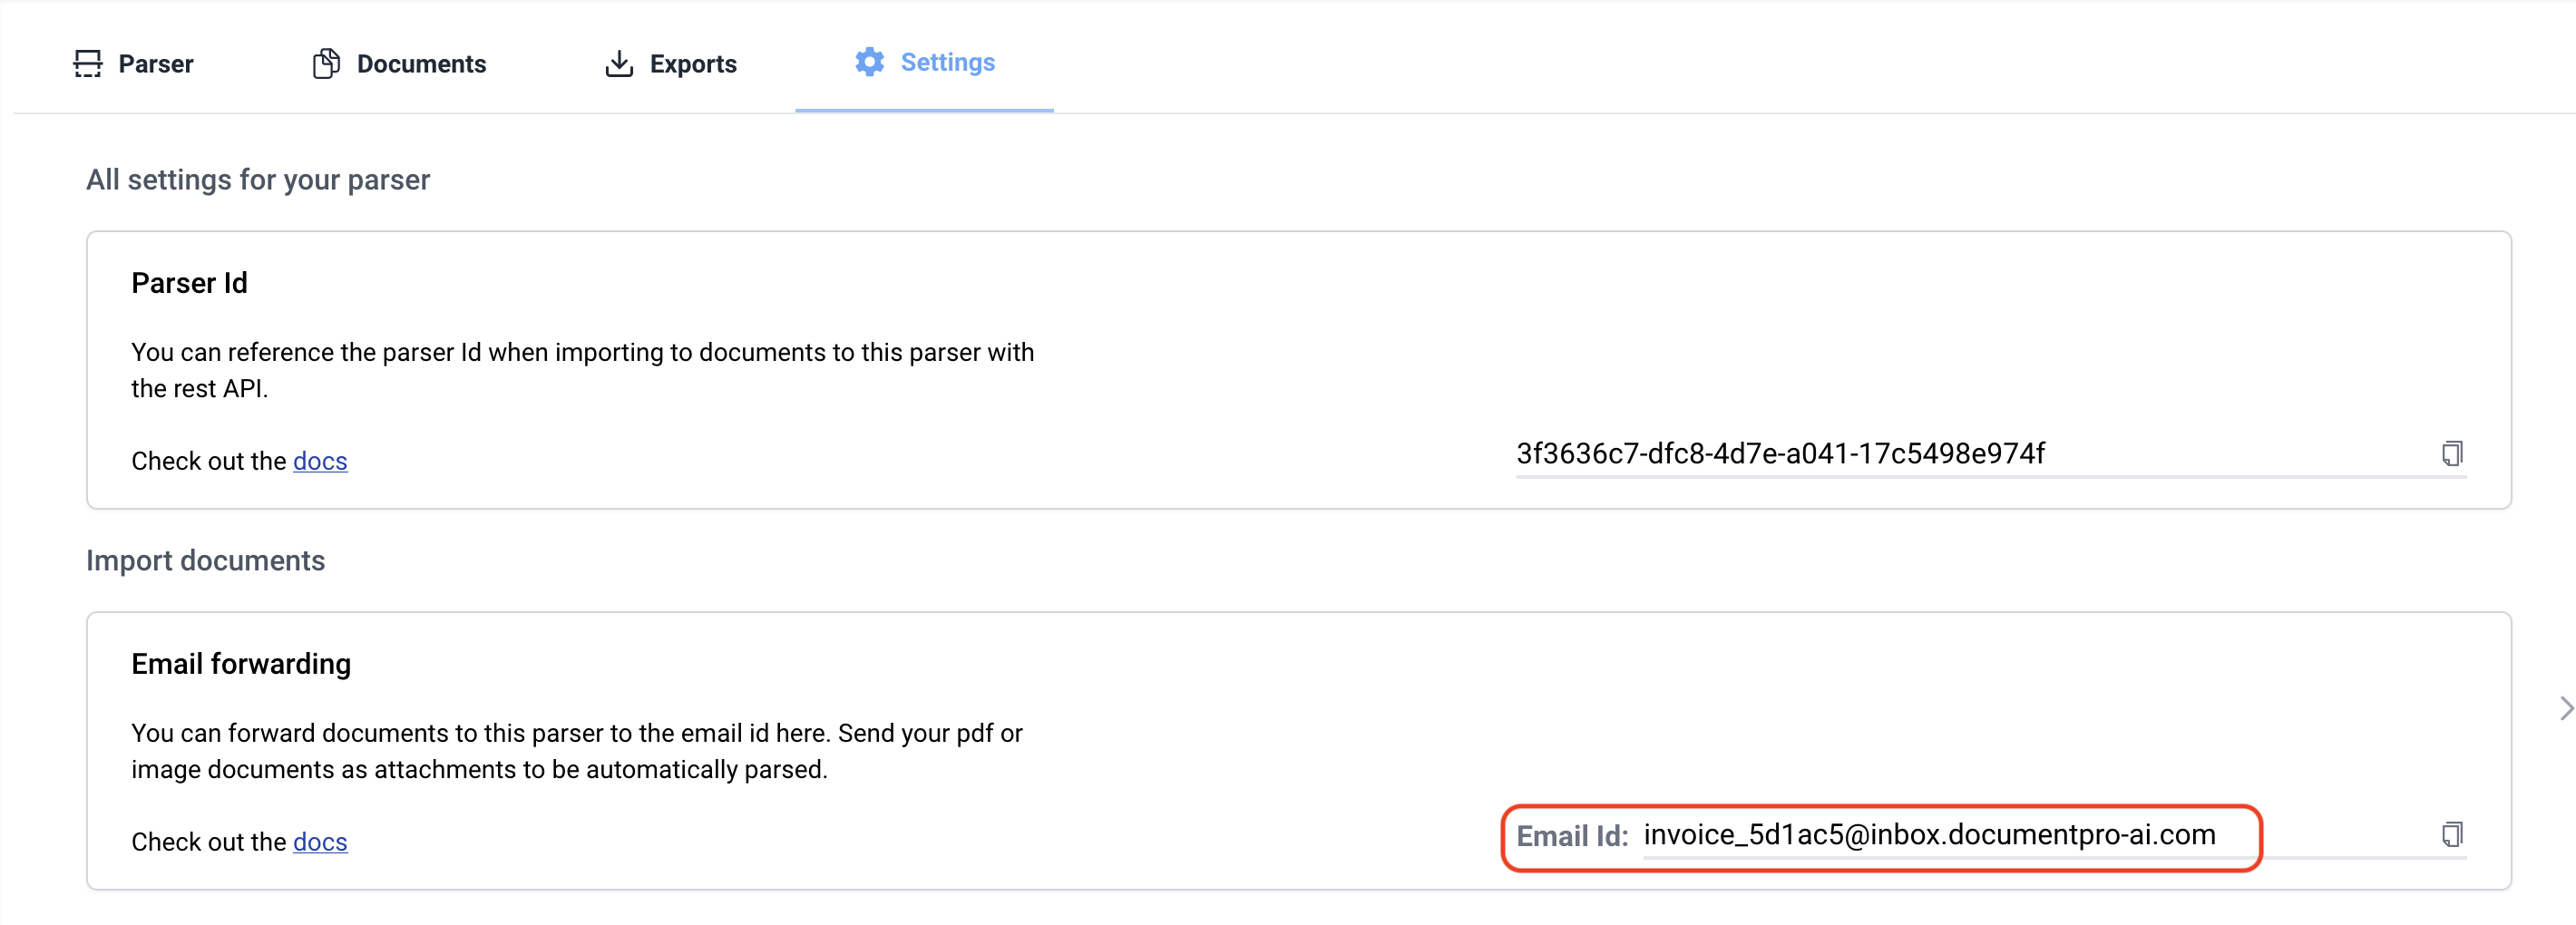 Email forwarding settings